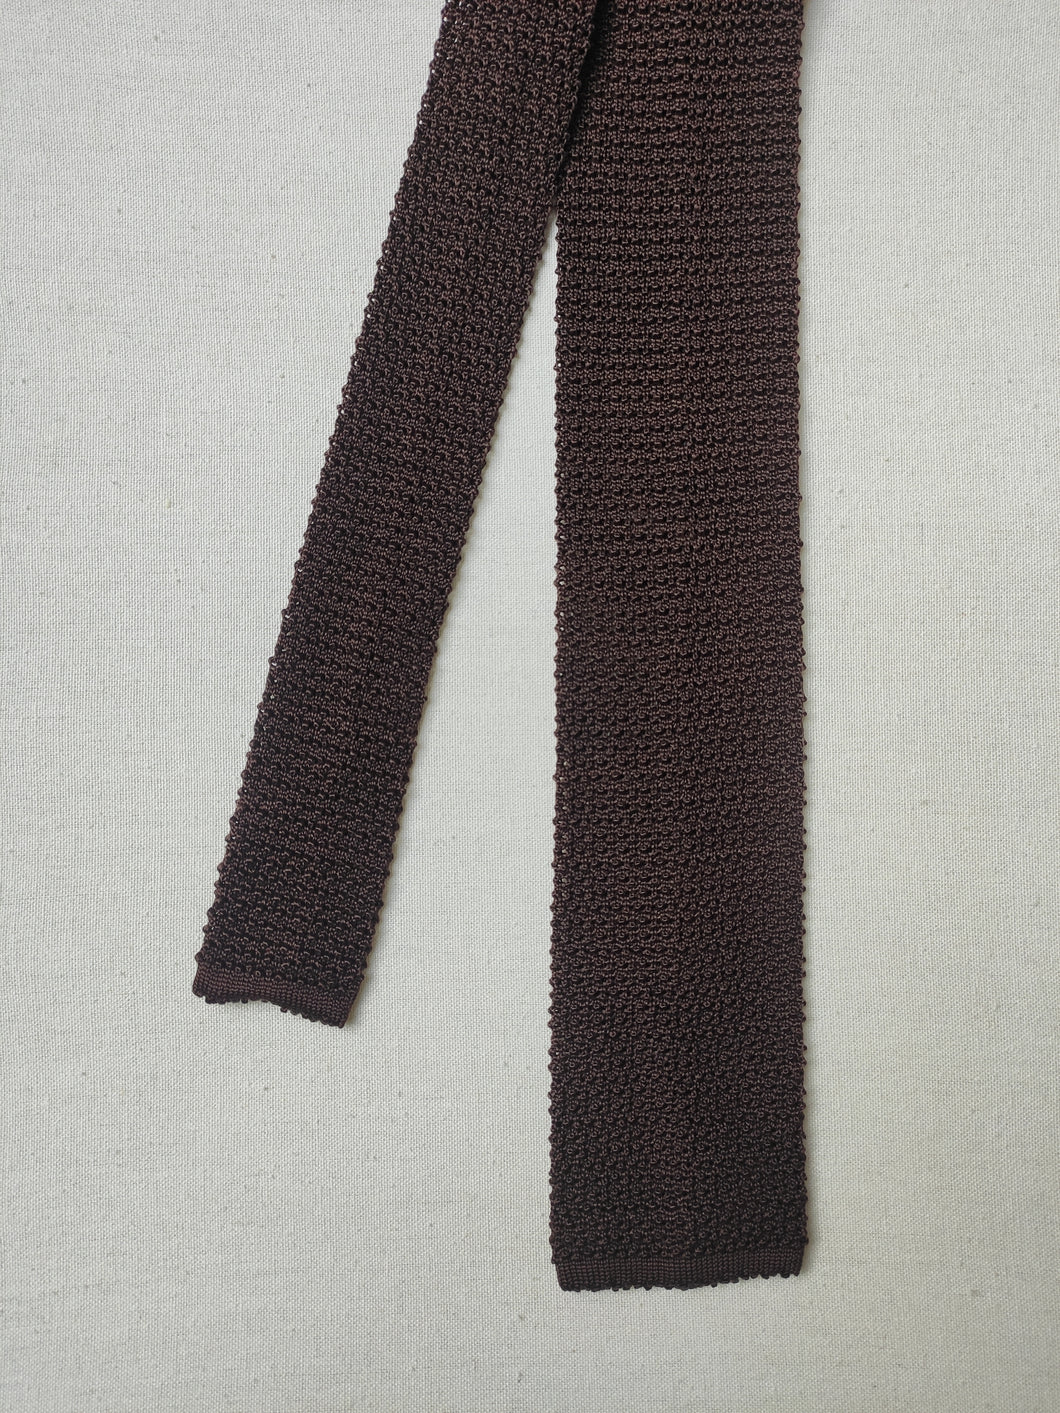 Cravate vintage marron  en tricot de soie Made in Italy